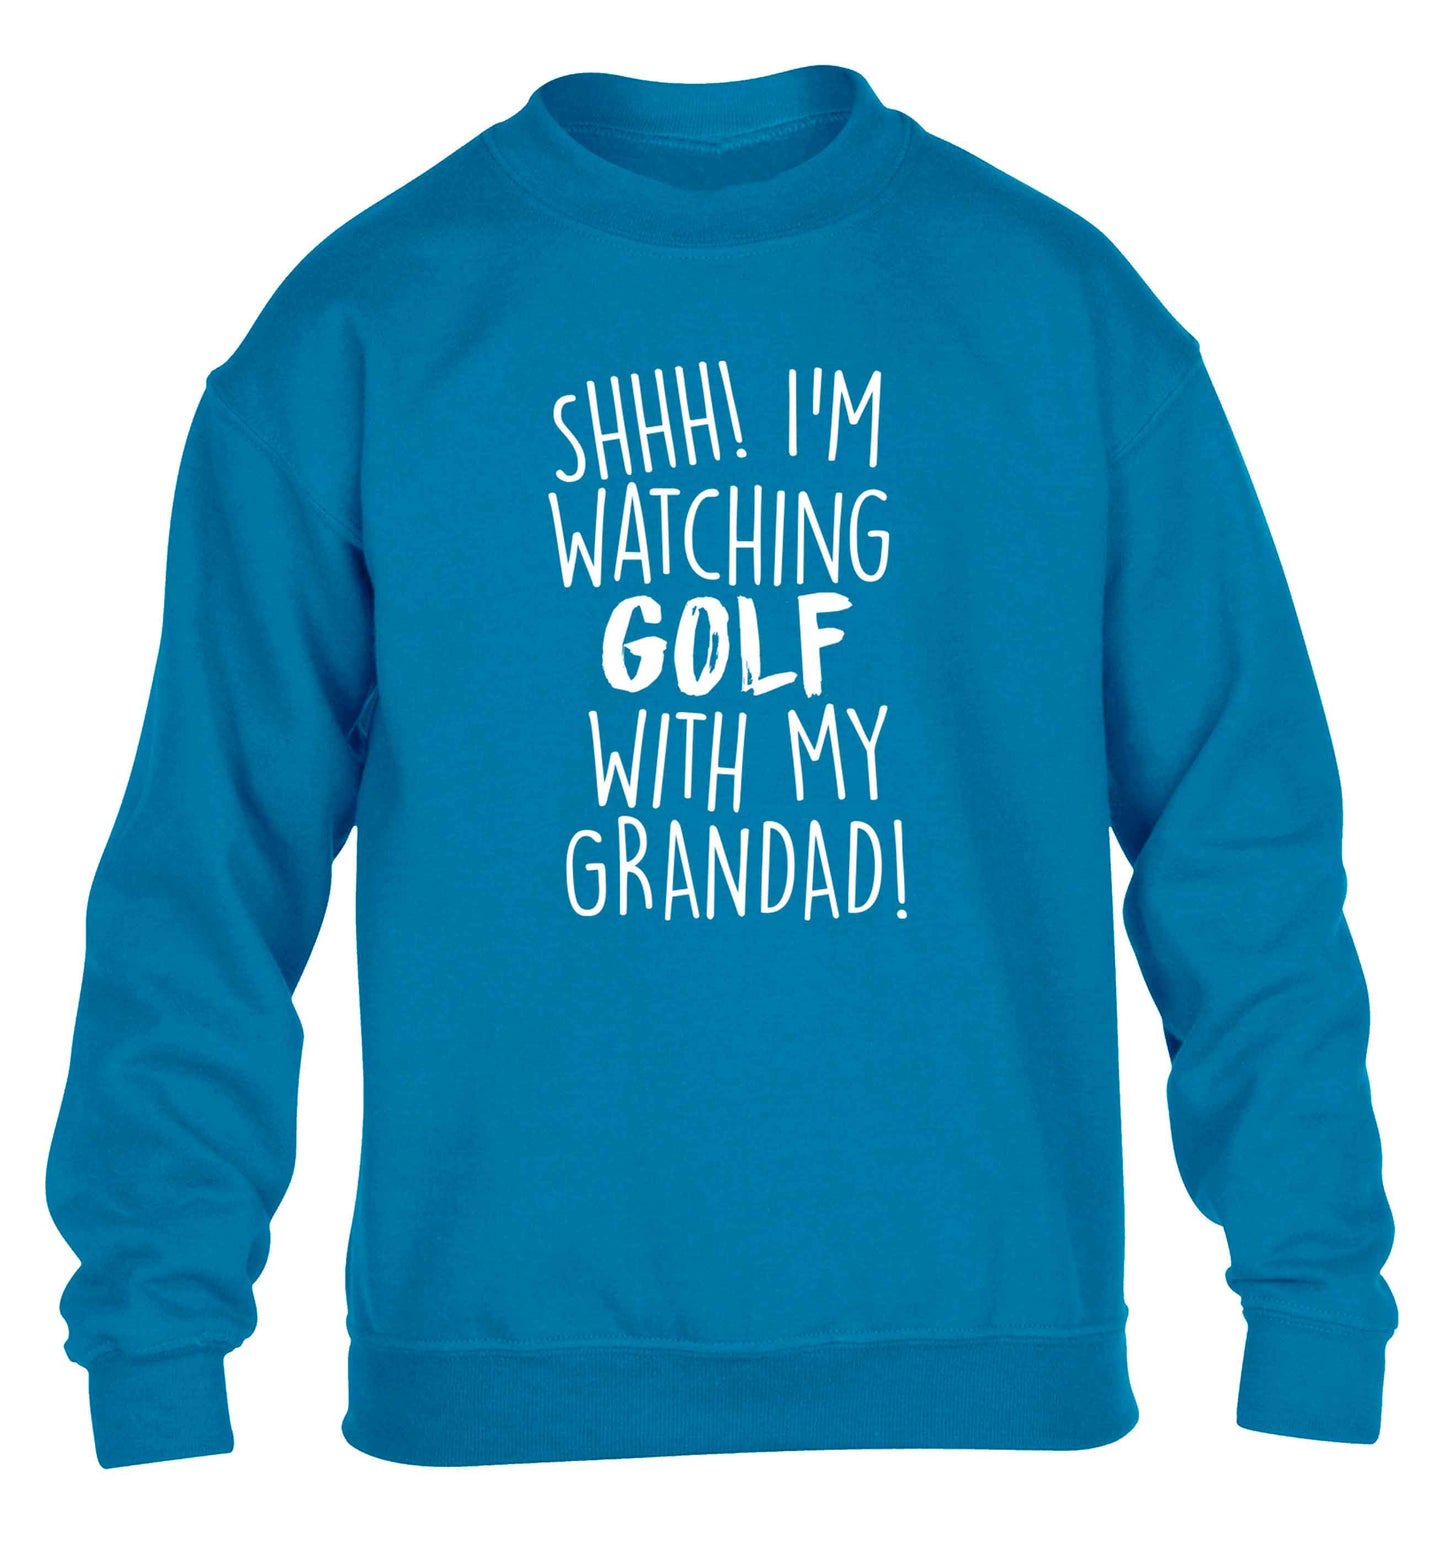 Shh I'm watching golf with my grandad children's blue sweater 12-13 Years